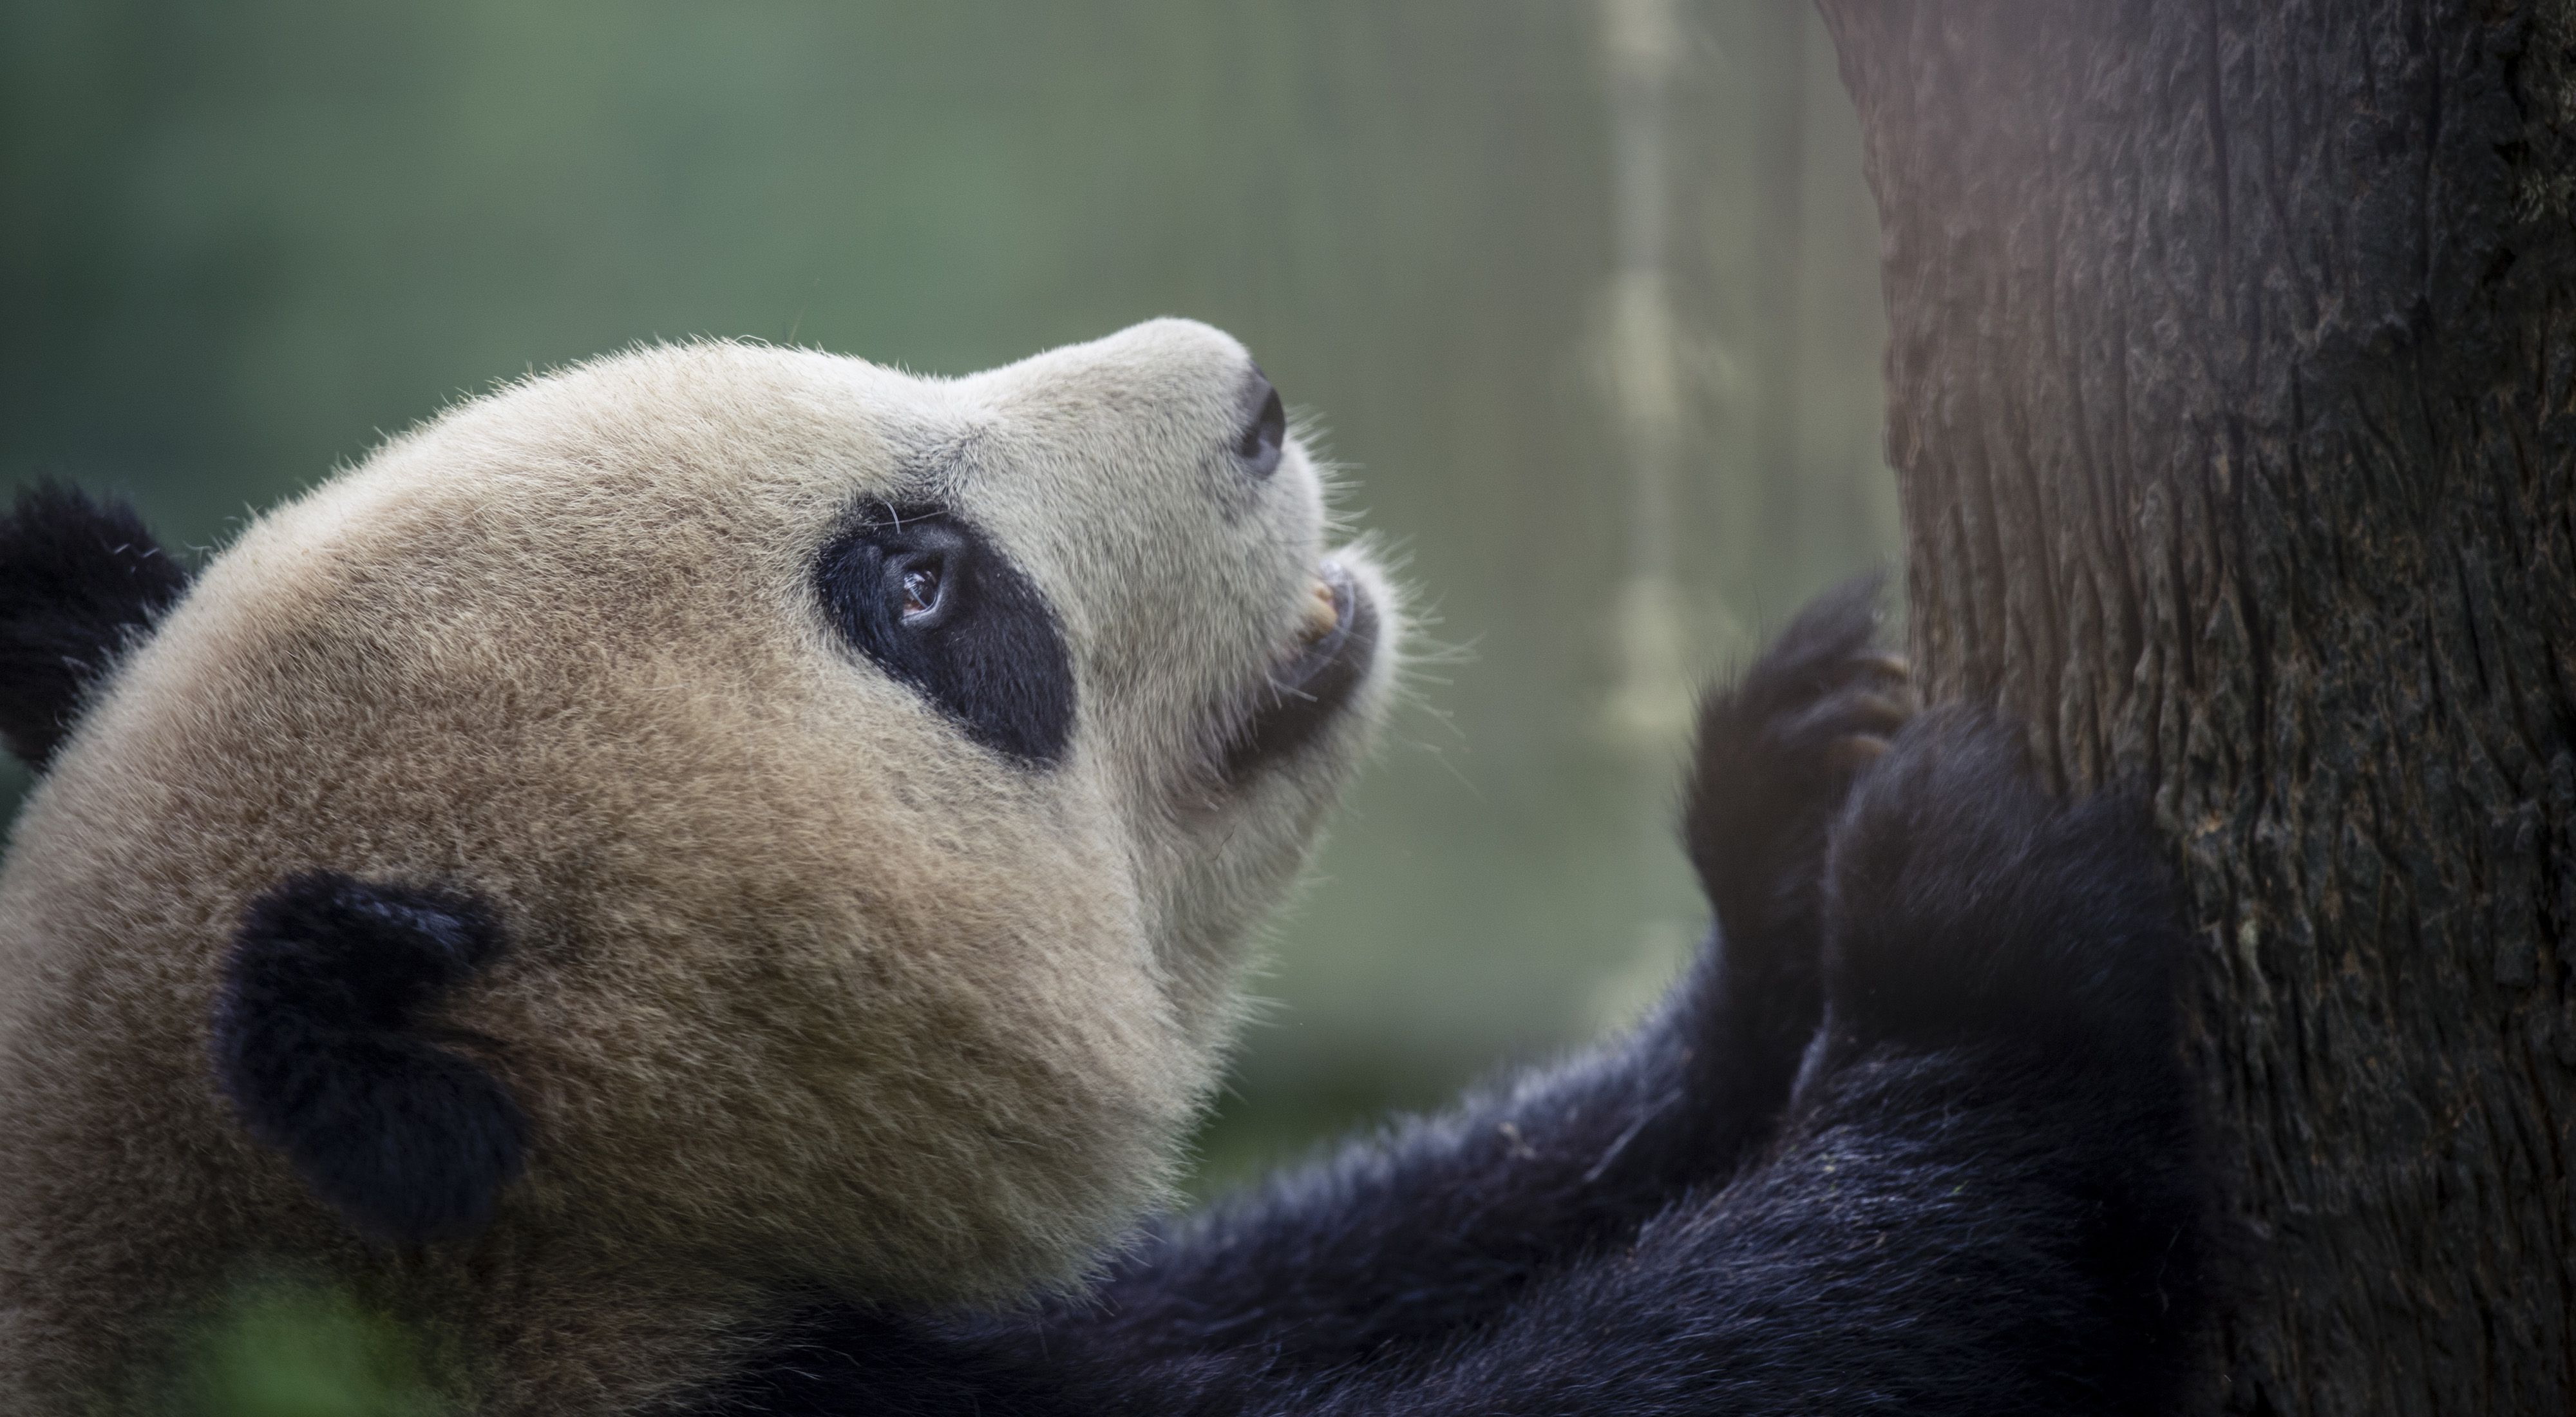 A panda scratches a tree